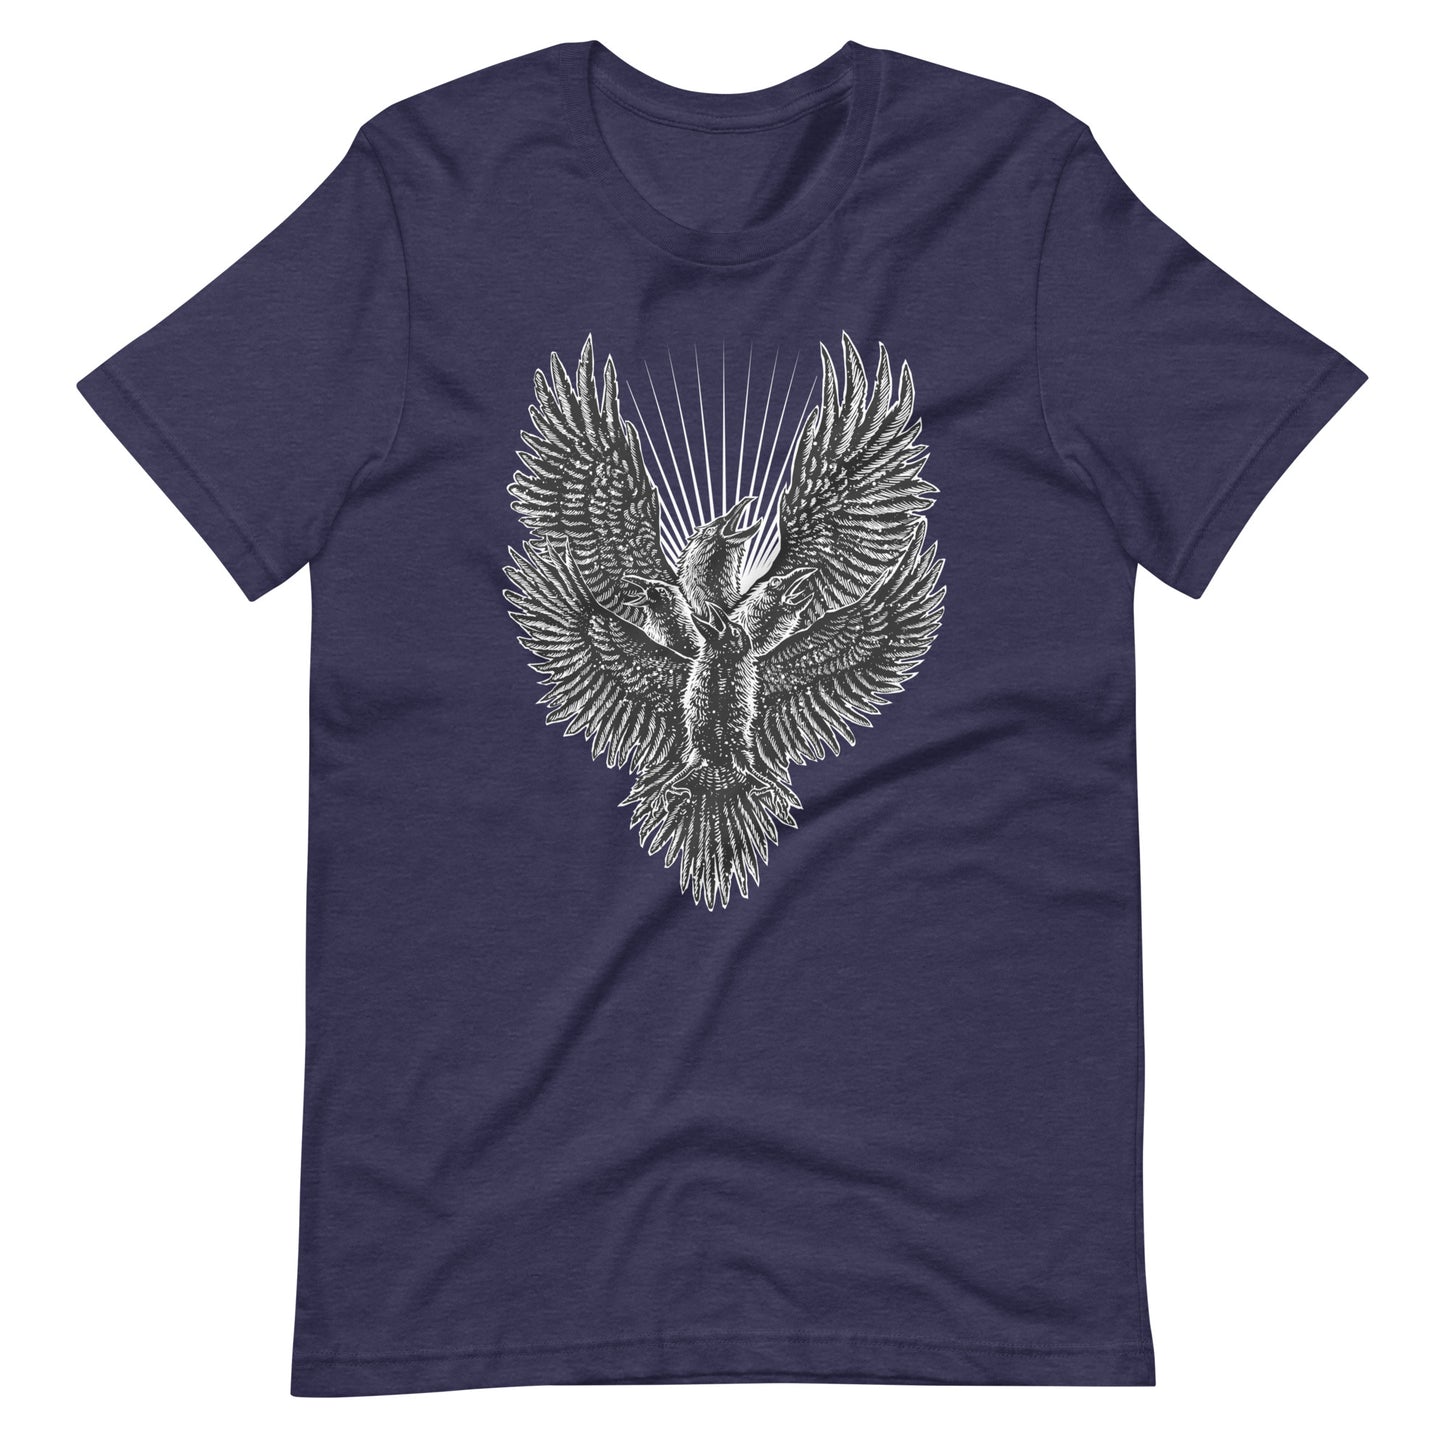 Luminous Crow - Men's t-shirt - Heather Midnight Navy Front